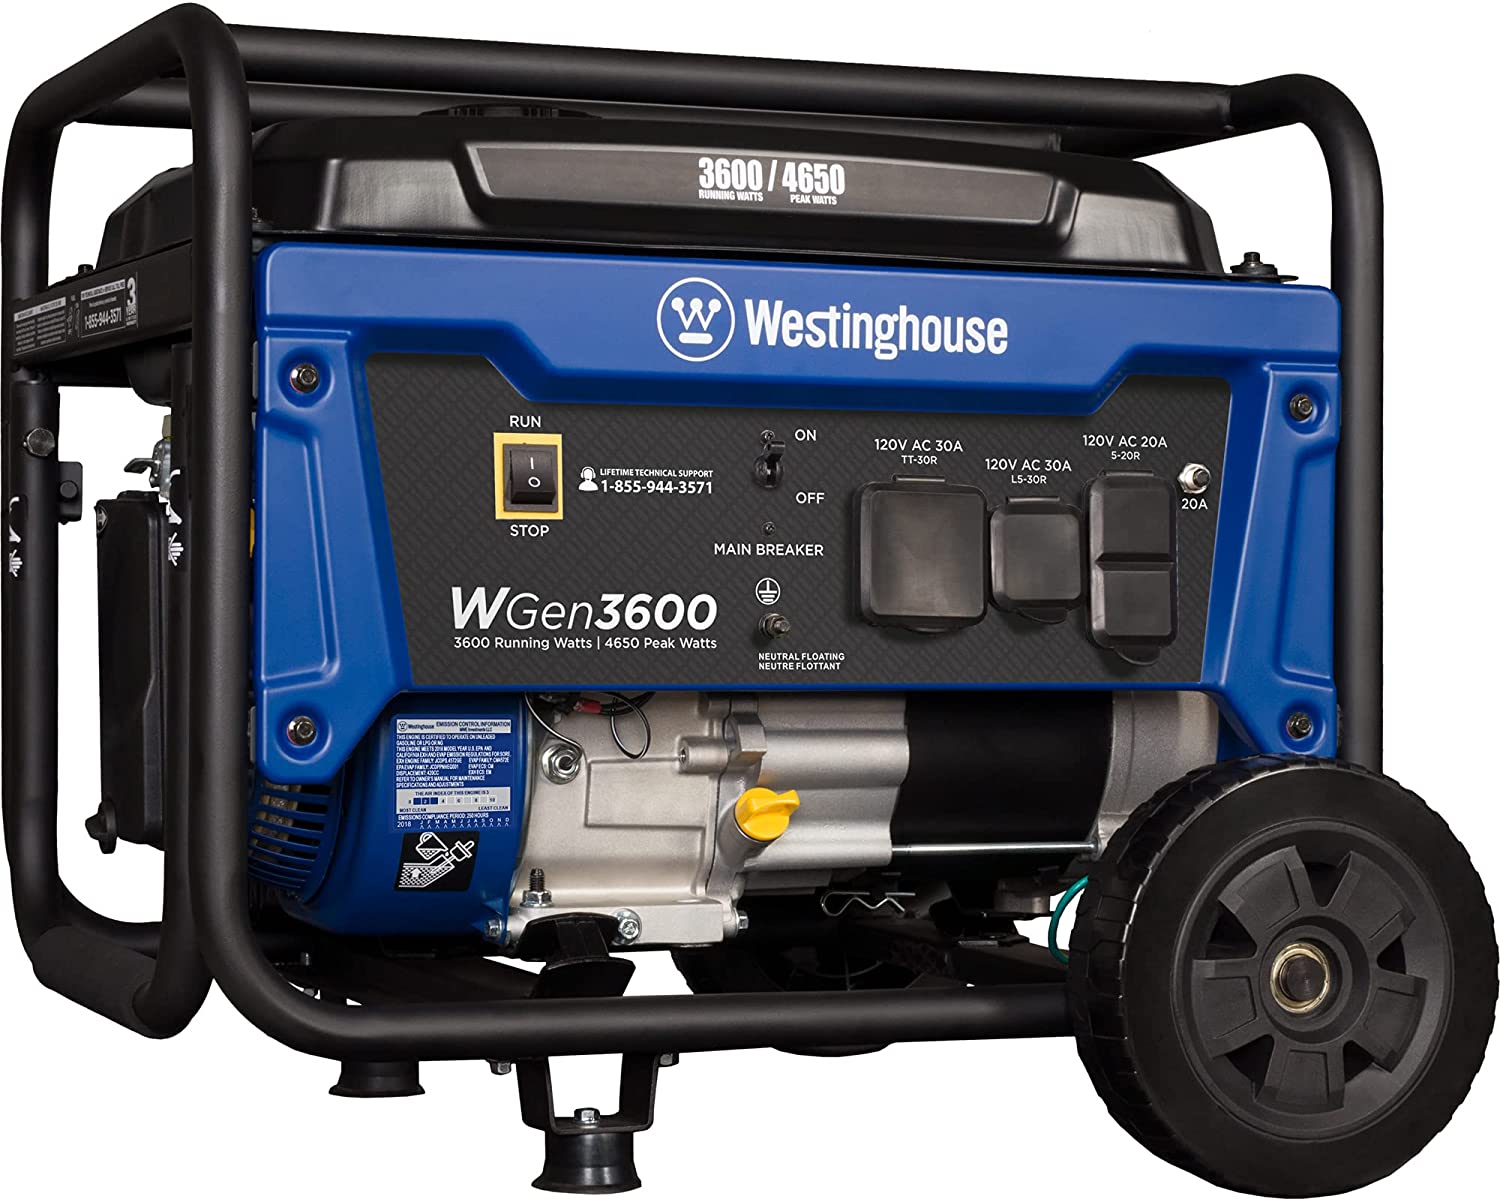 Westinghouse Outdoor Power Equipment WGen3600 Portable Generator